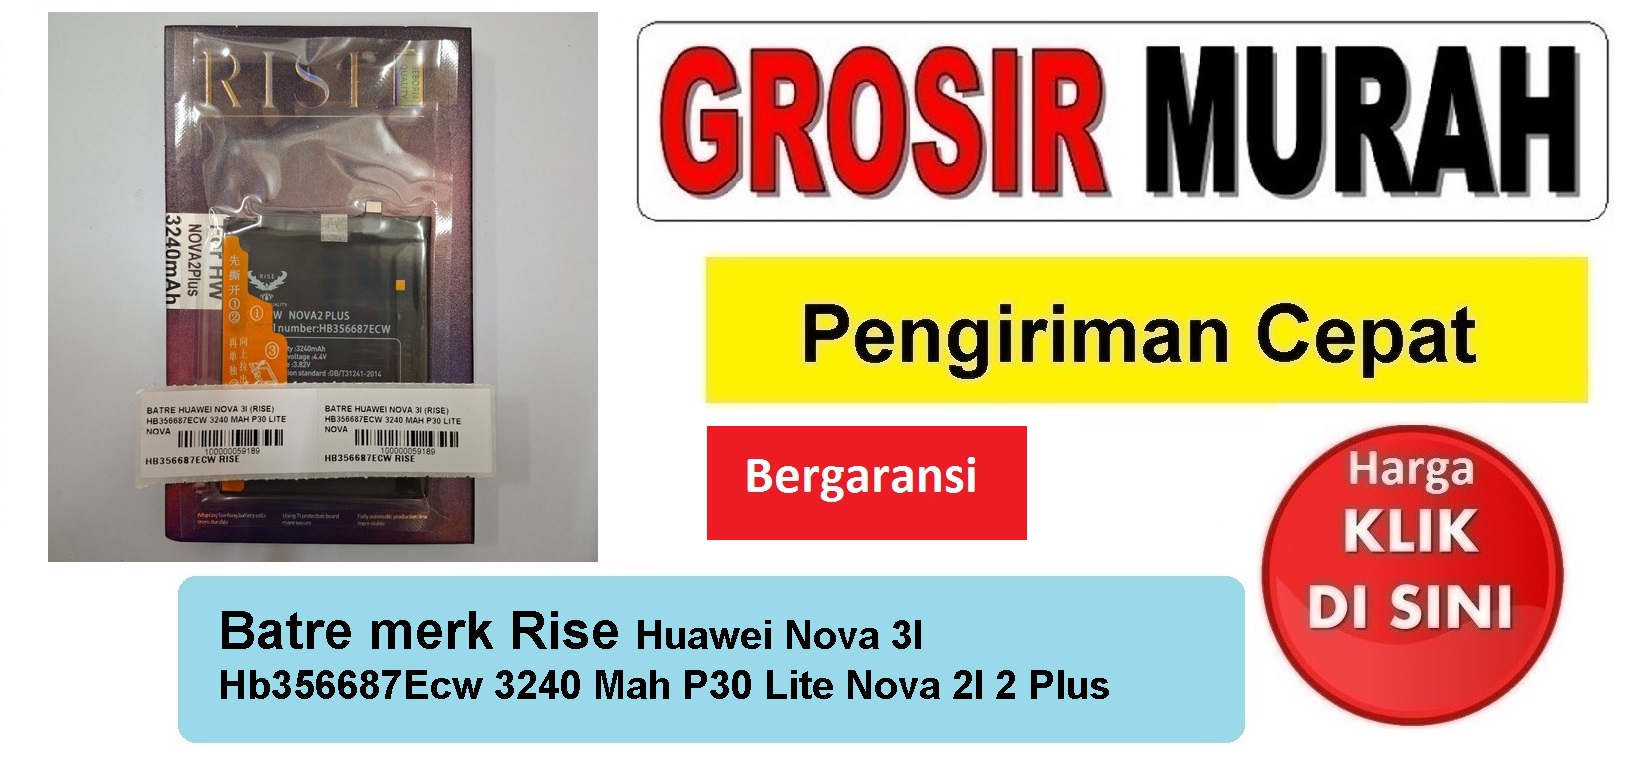 Batre merk Rise Huawei Nova 3I Hb356687Ecw 3240 Mah P30 Lite Nova 2I 2 Plus Baterai Battery Bergaransi Batere